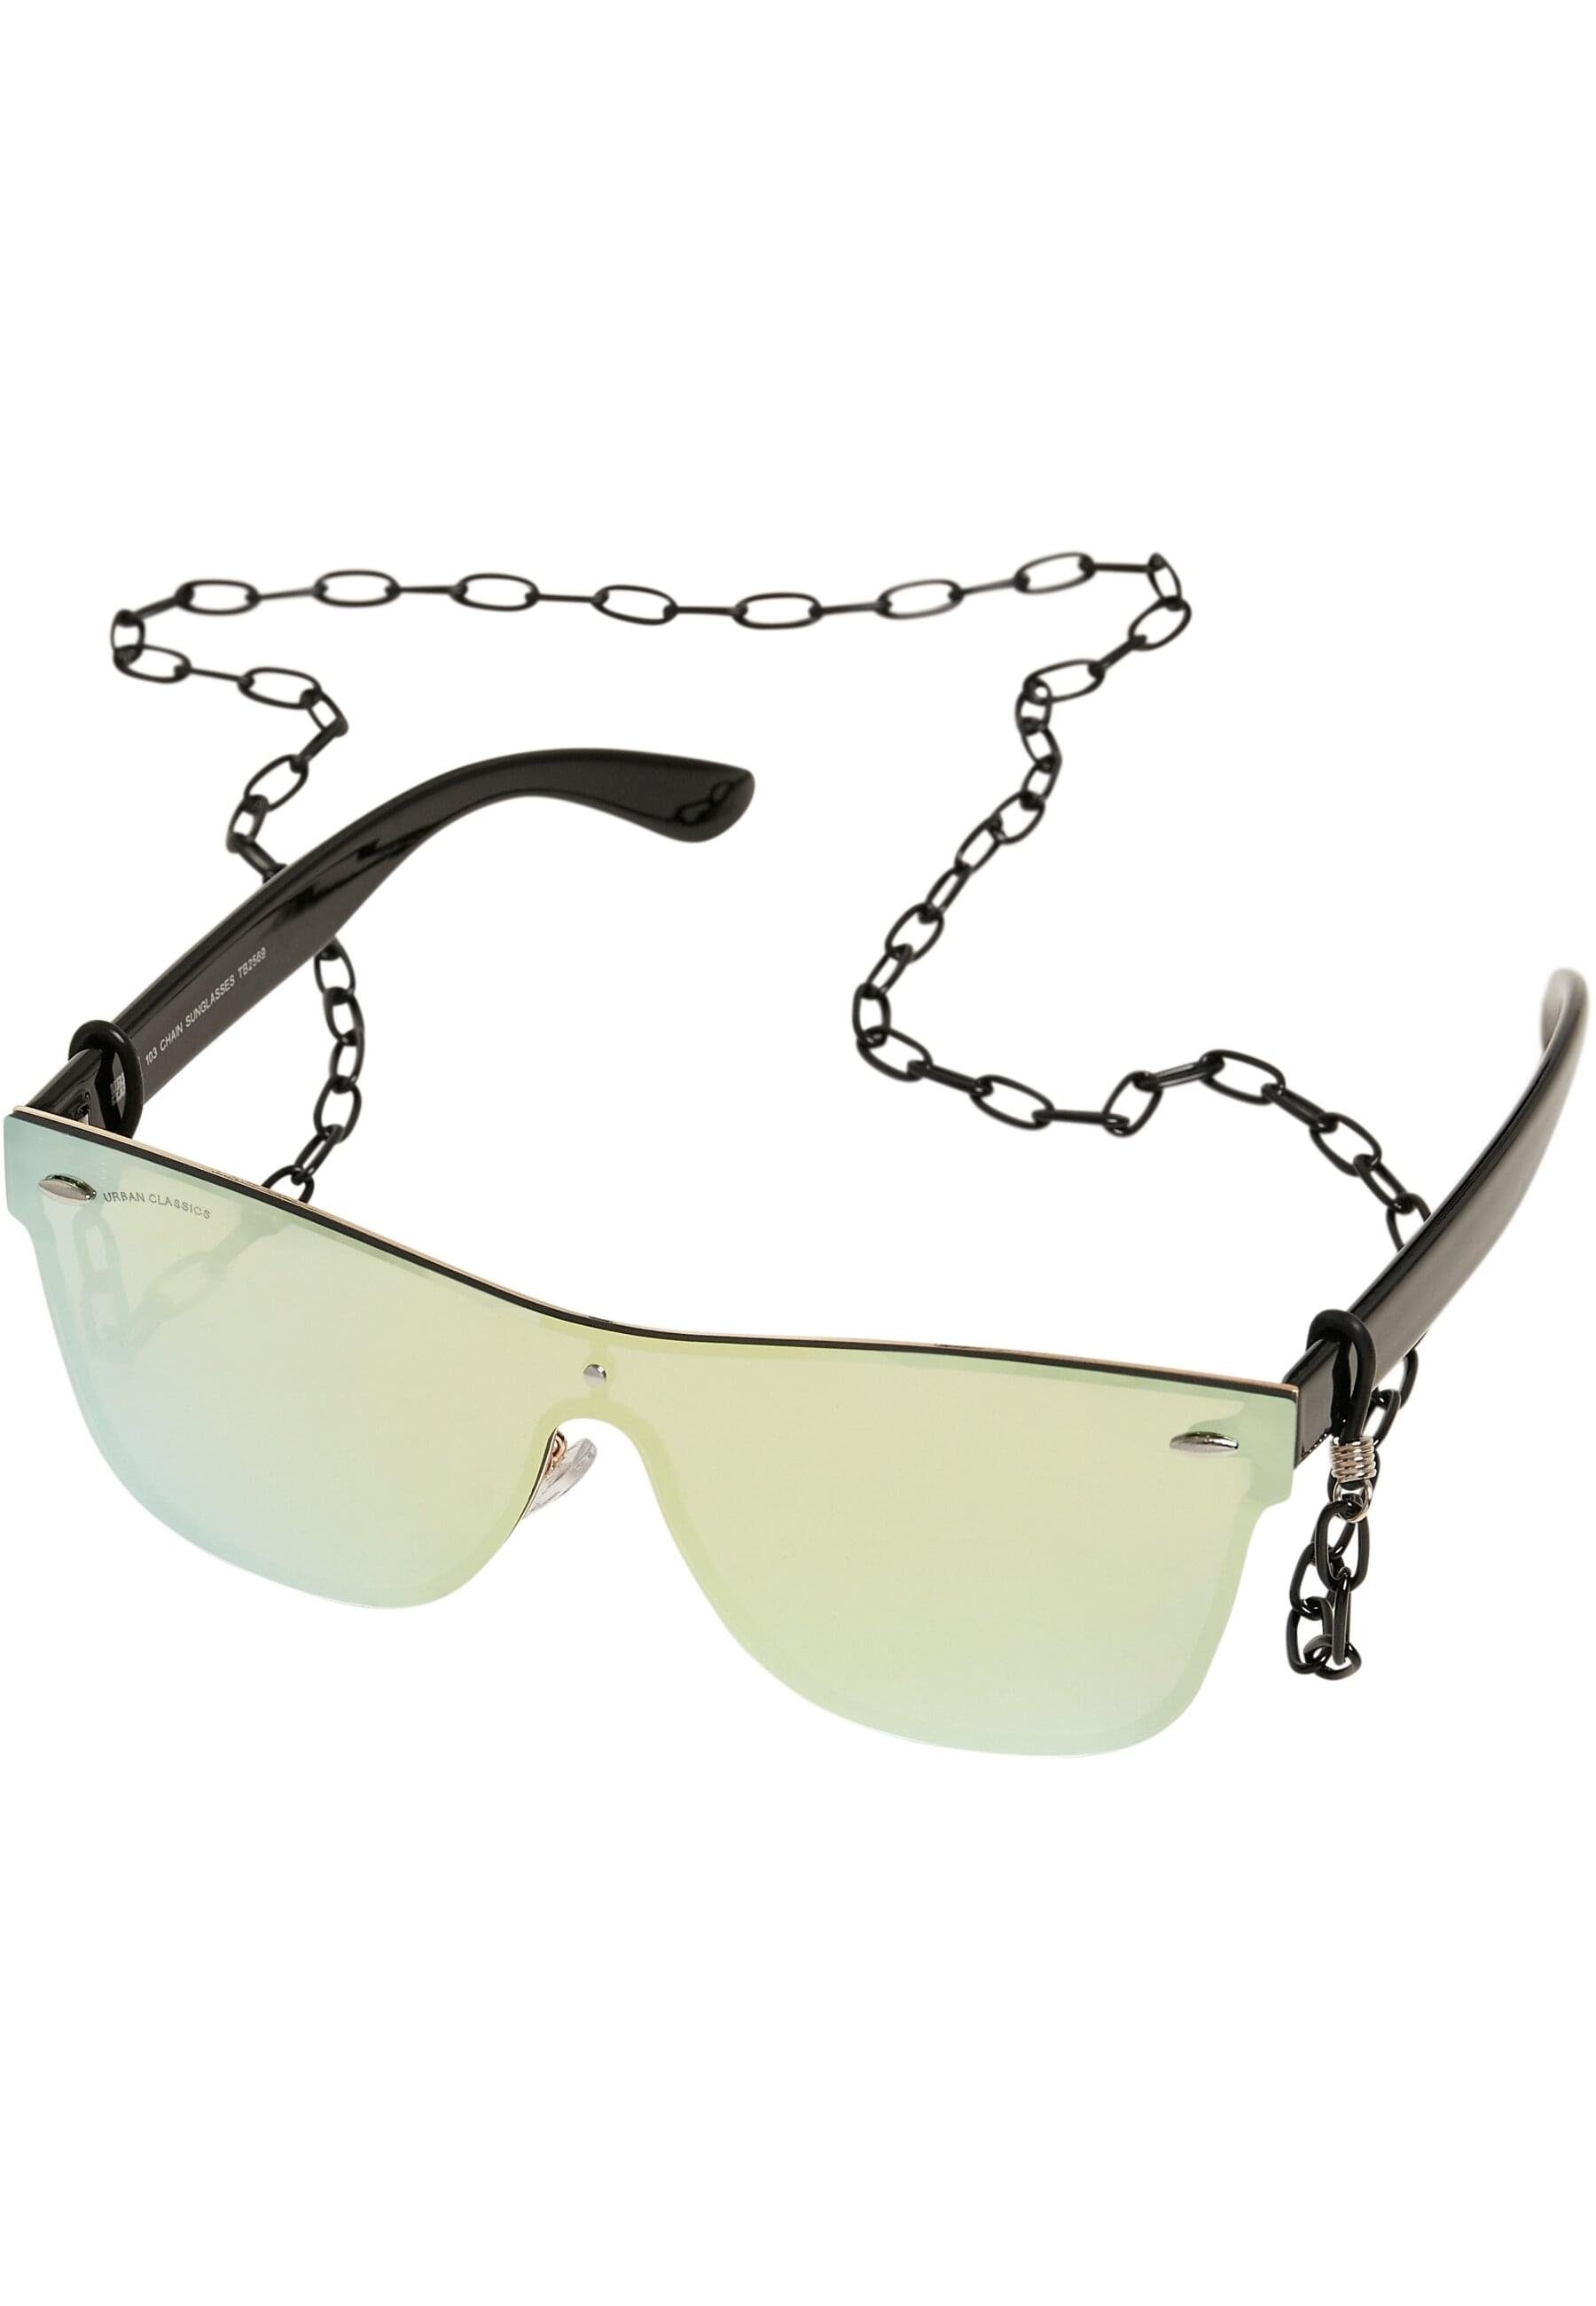 URBAN CLASSICS Sonnenbrille Unisex 103 Sunglasses Chain mirror black/gold